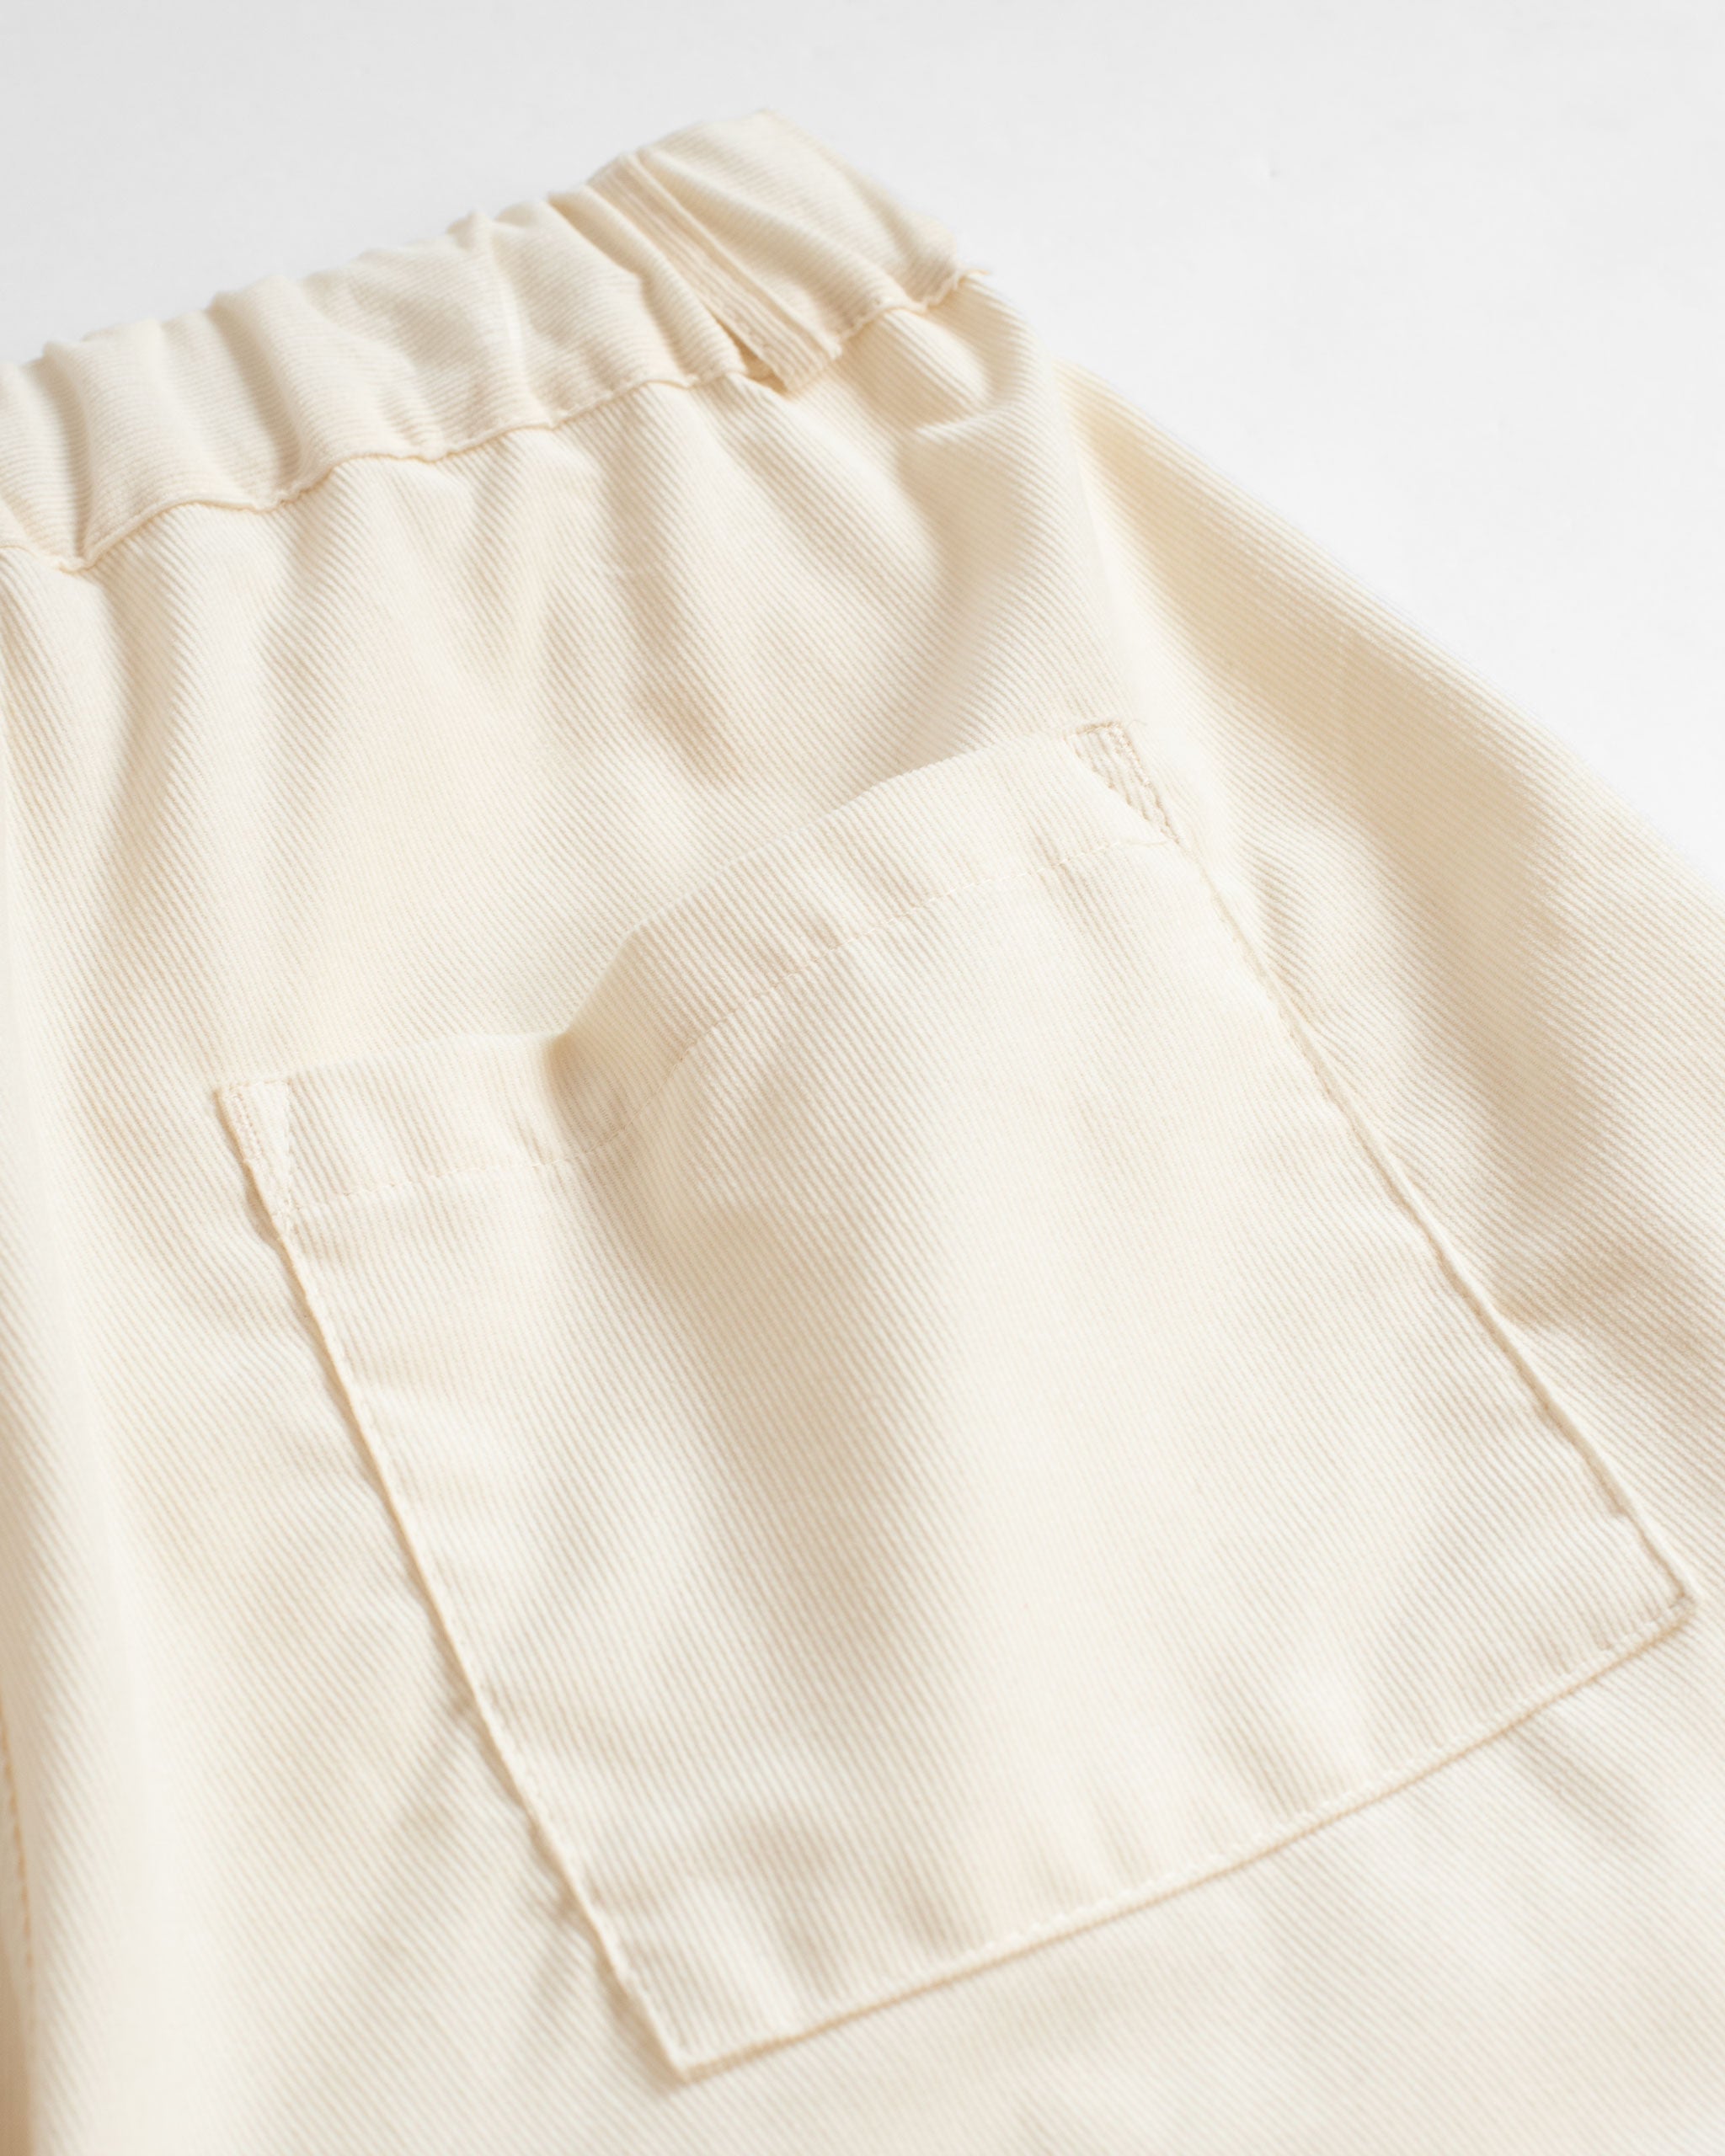 back pocket shot of Solid Natural Cotton Corduroy Leisure Shorts